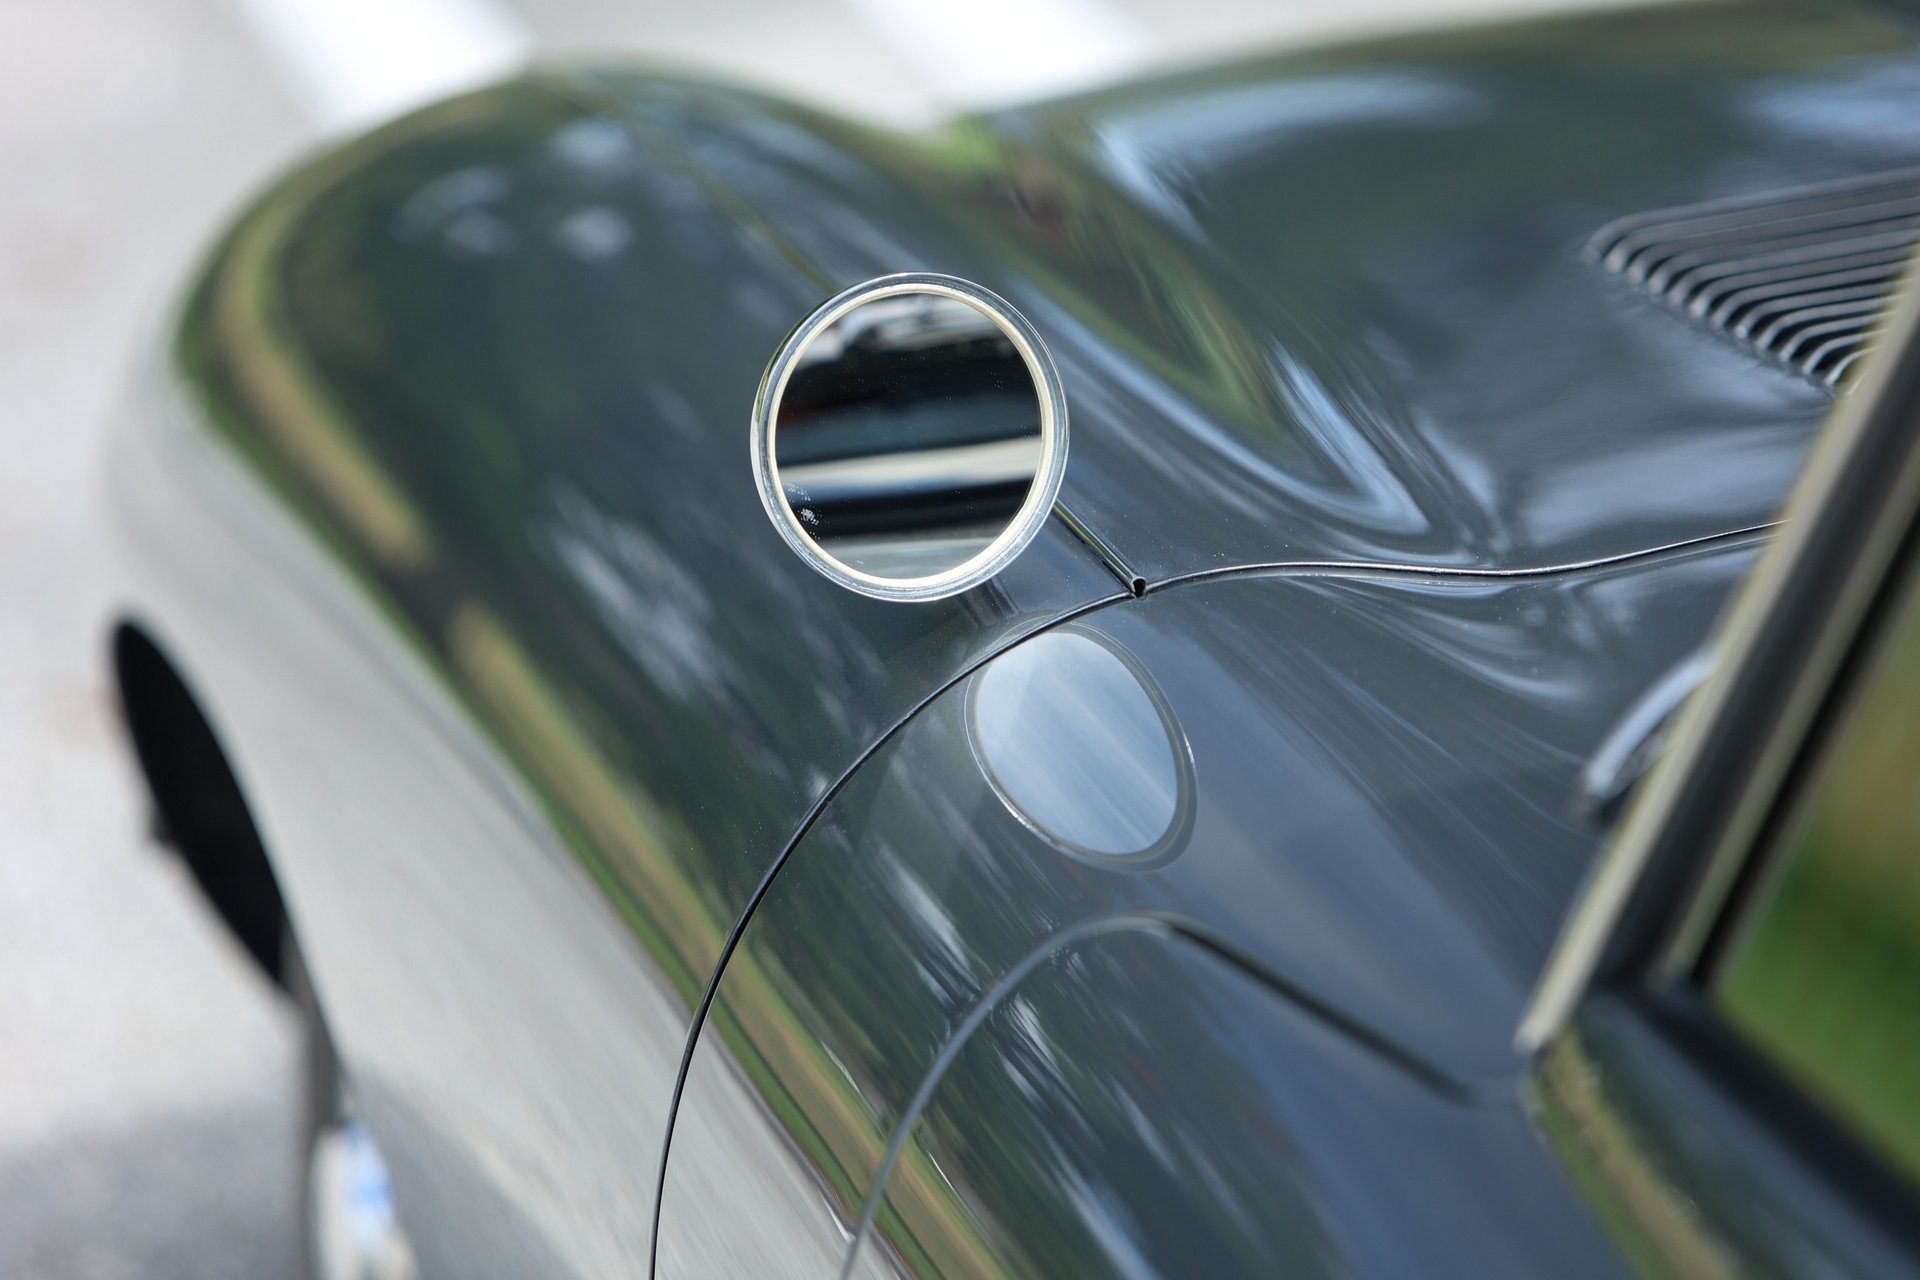 1966 jaguar e type series i 4 2 fixed head coupe